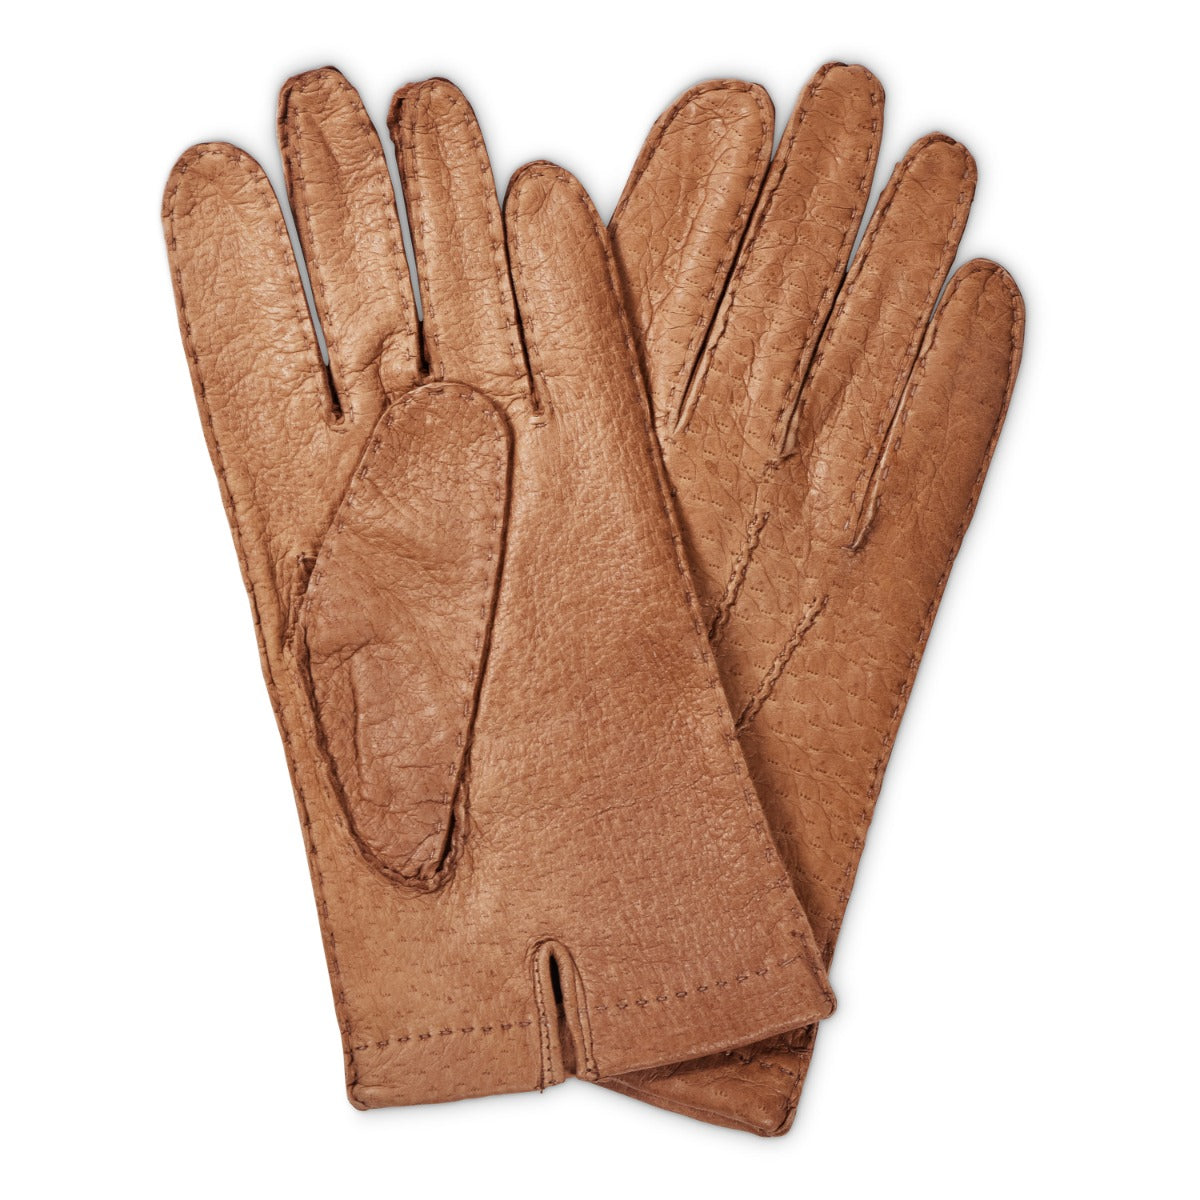 Italian craftsmanship, handmade Sovereign Grade Light Brown Peccary Leather Gloves, Unlined by KirbyAllison.com.